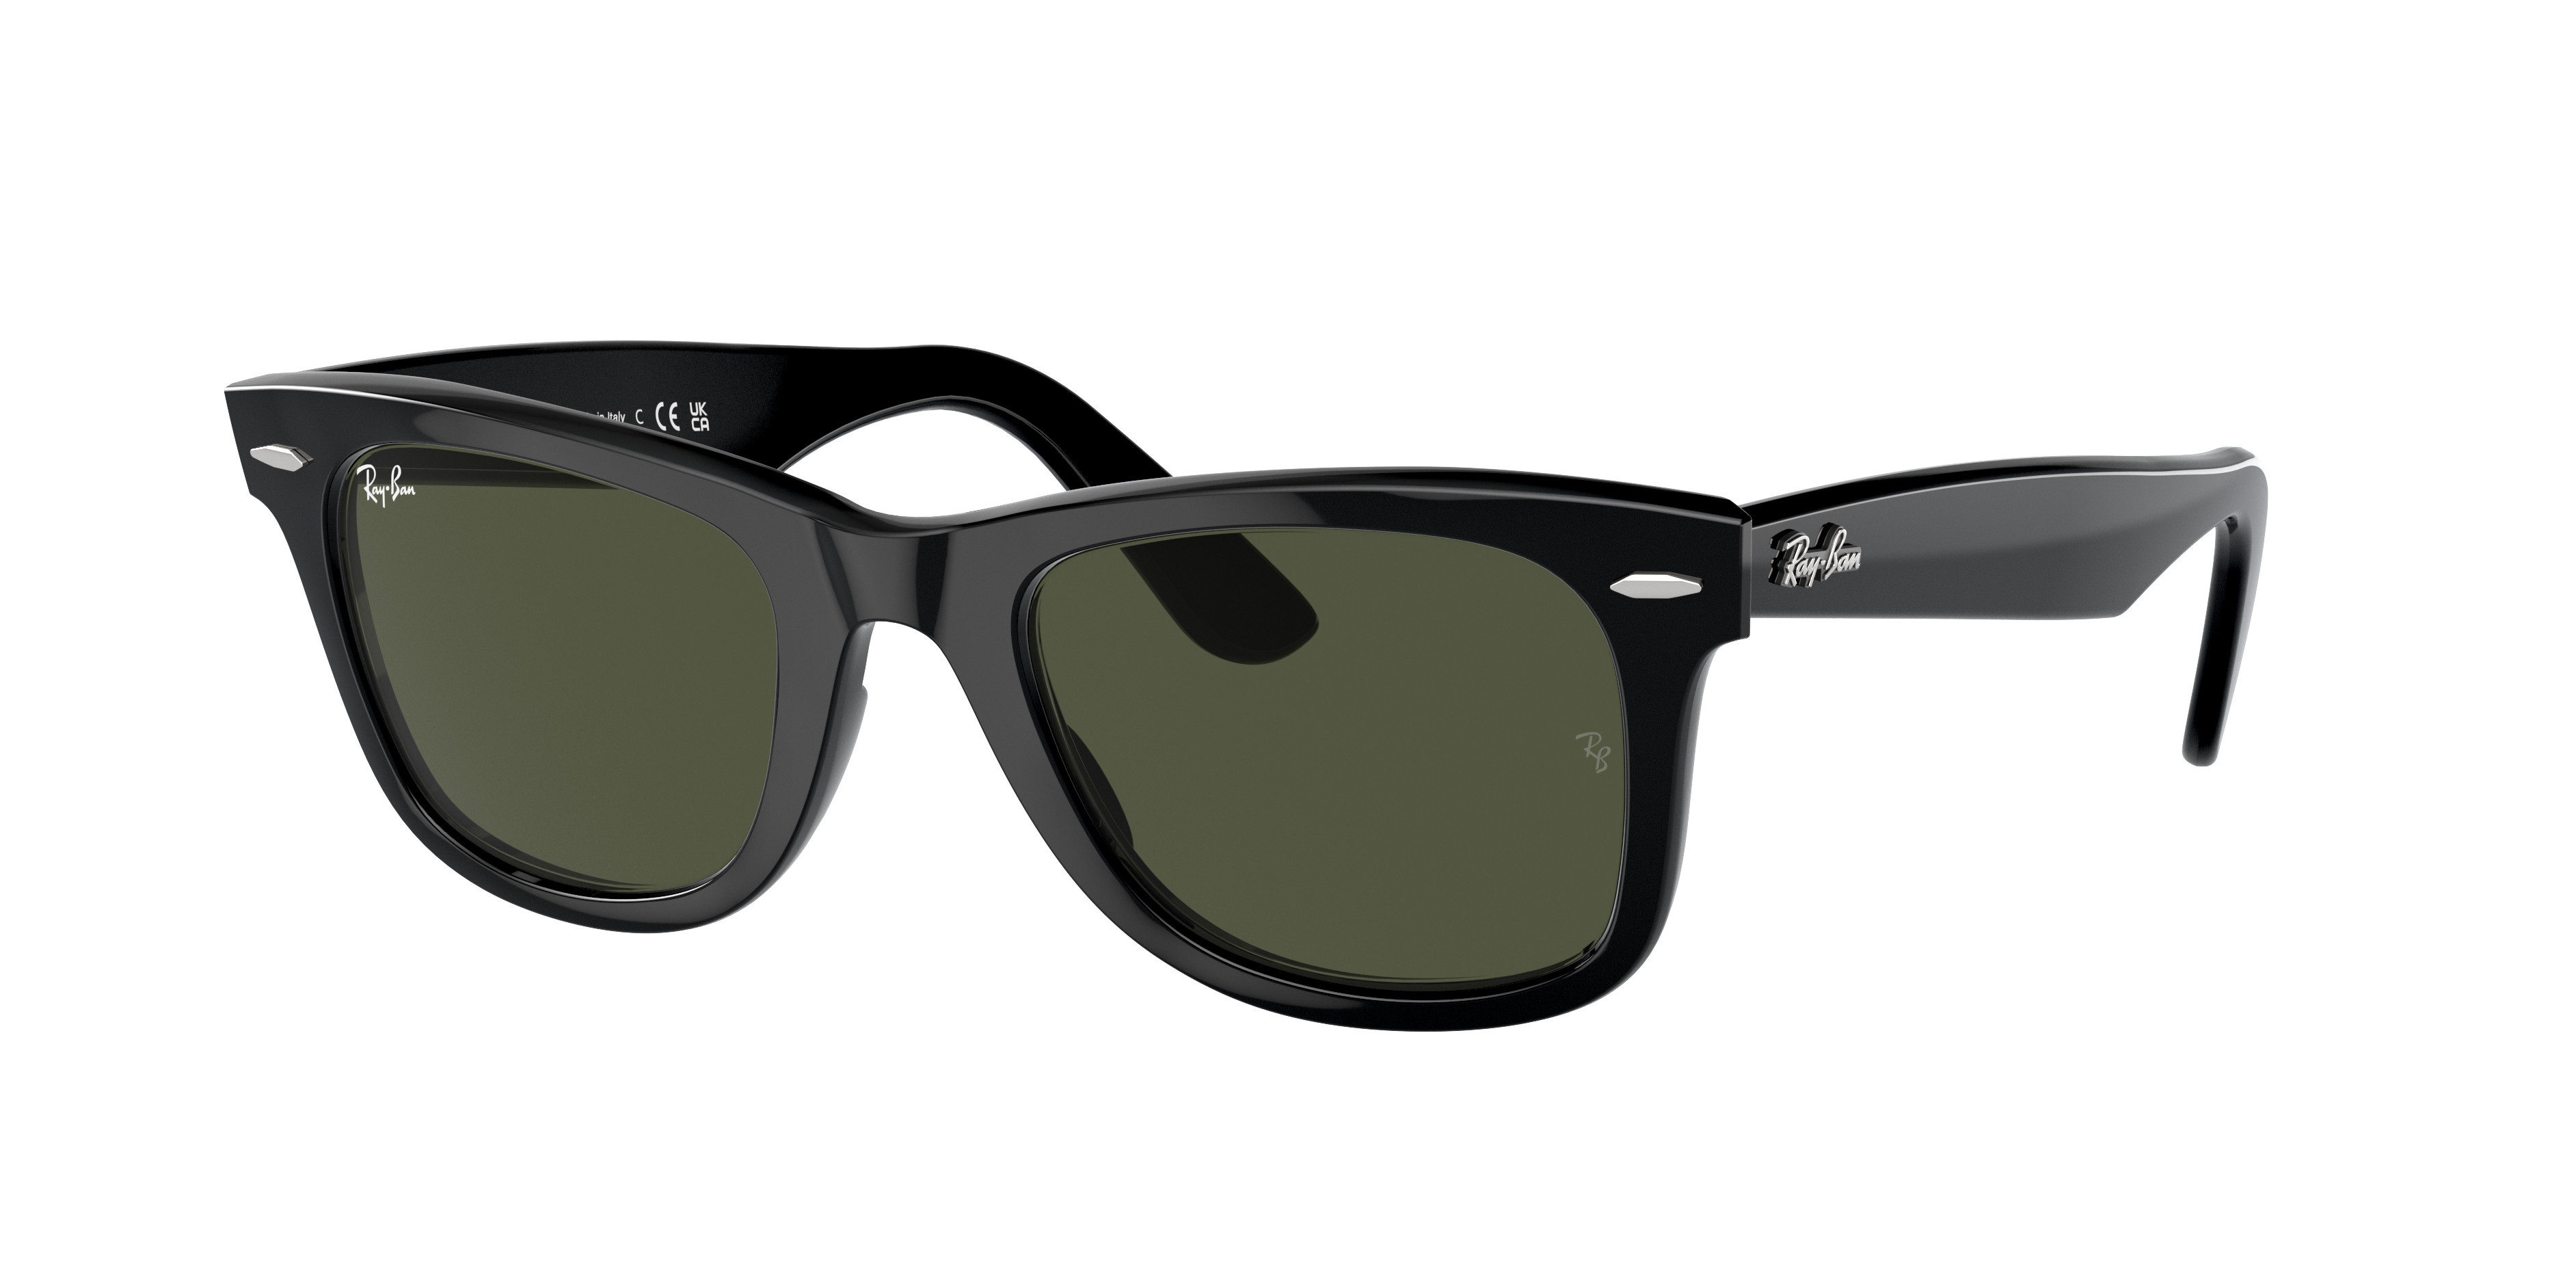 Bacteria Smash Mauve Original Wayfarer Classic Sunglasses in Black and Green | Ray-Ban®